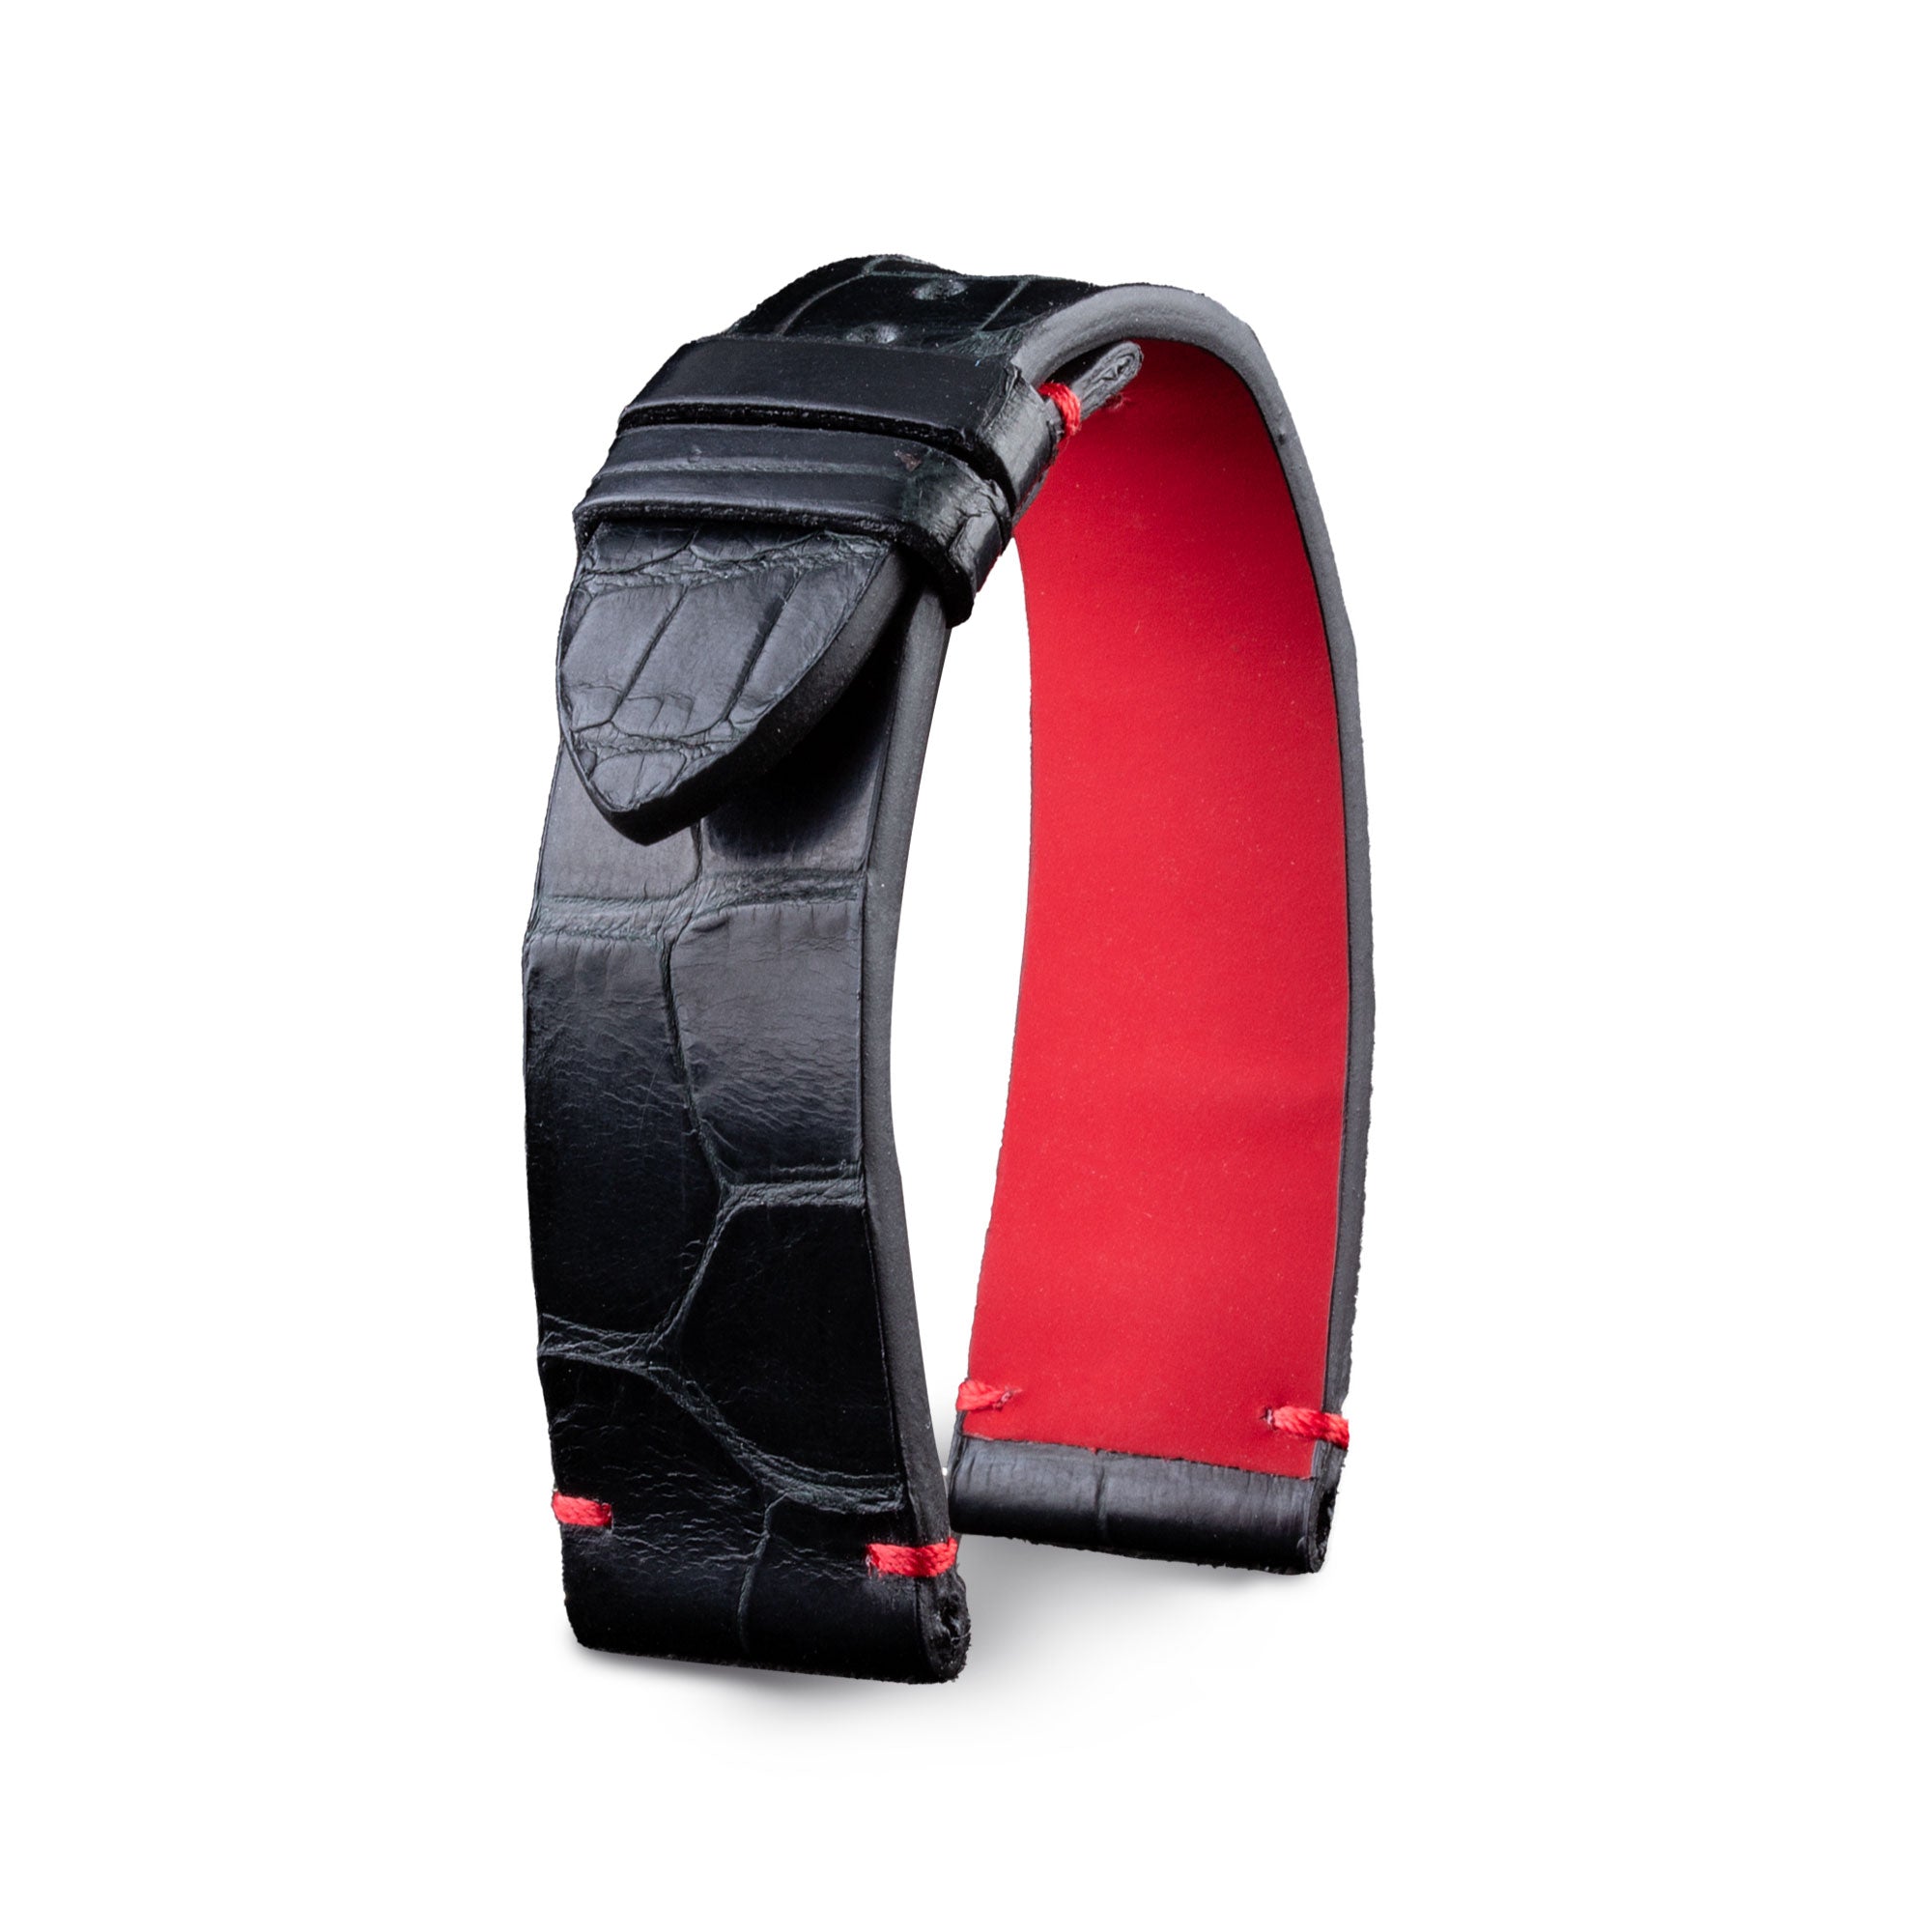 Apple Watch - Velcro fabric watch strap - Black nylon paris store – ABP  Concept